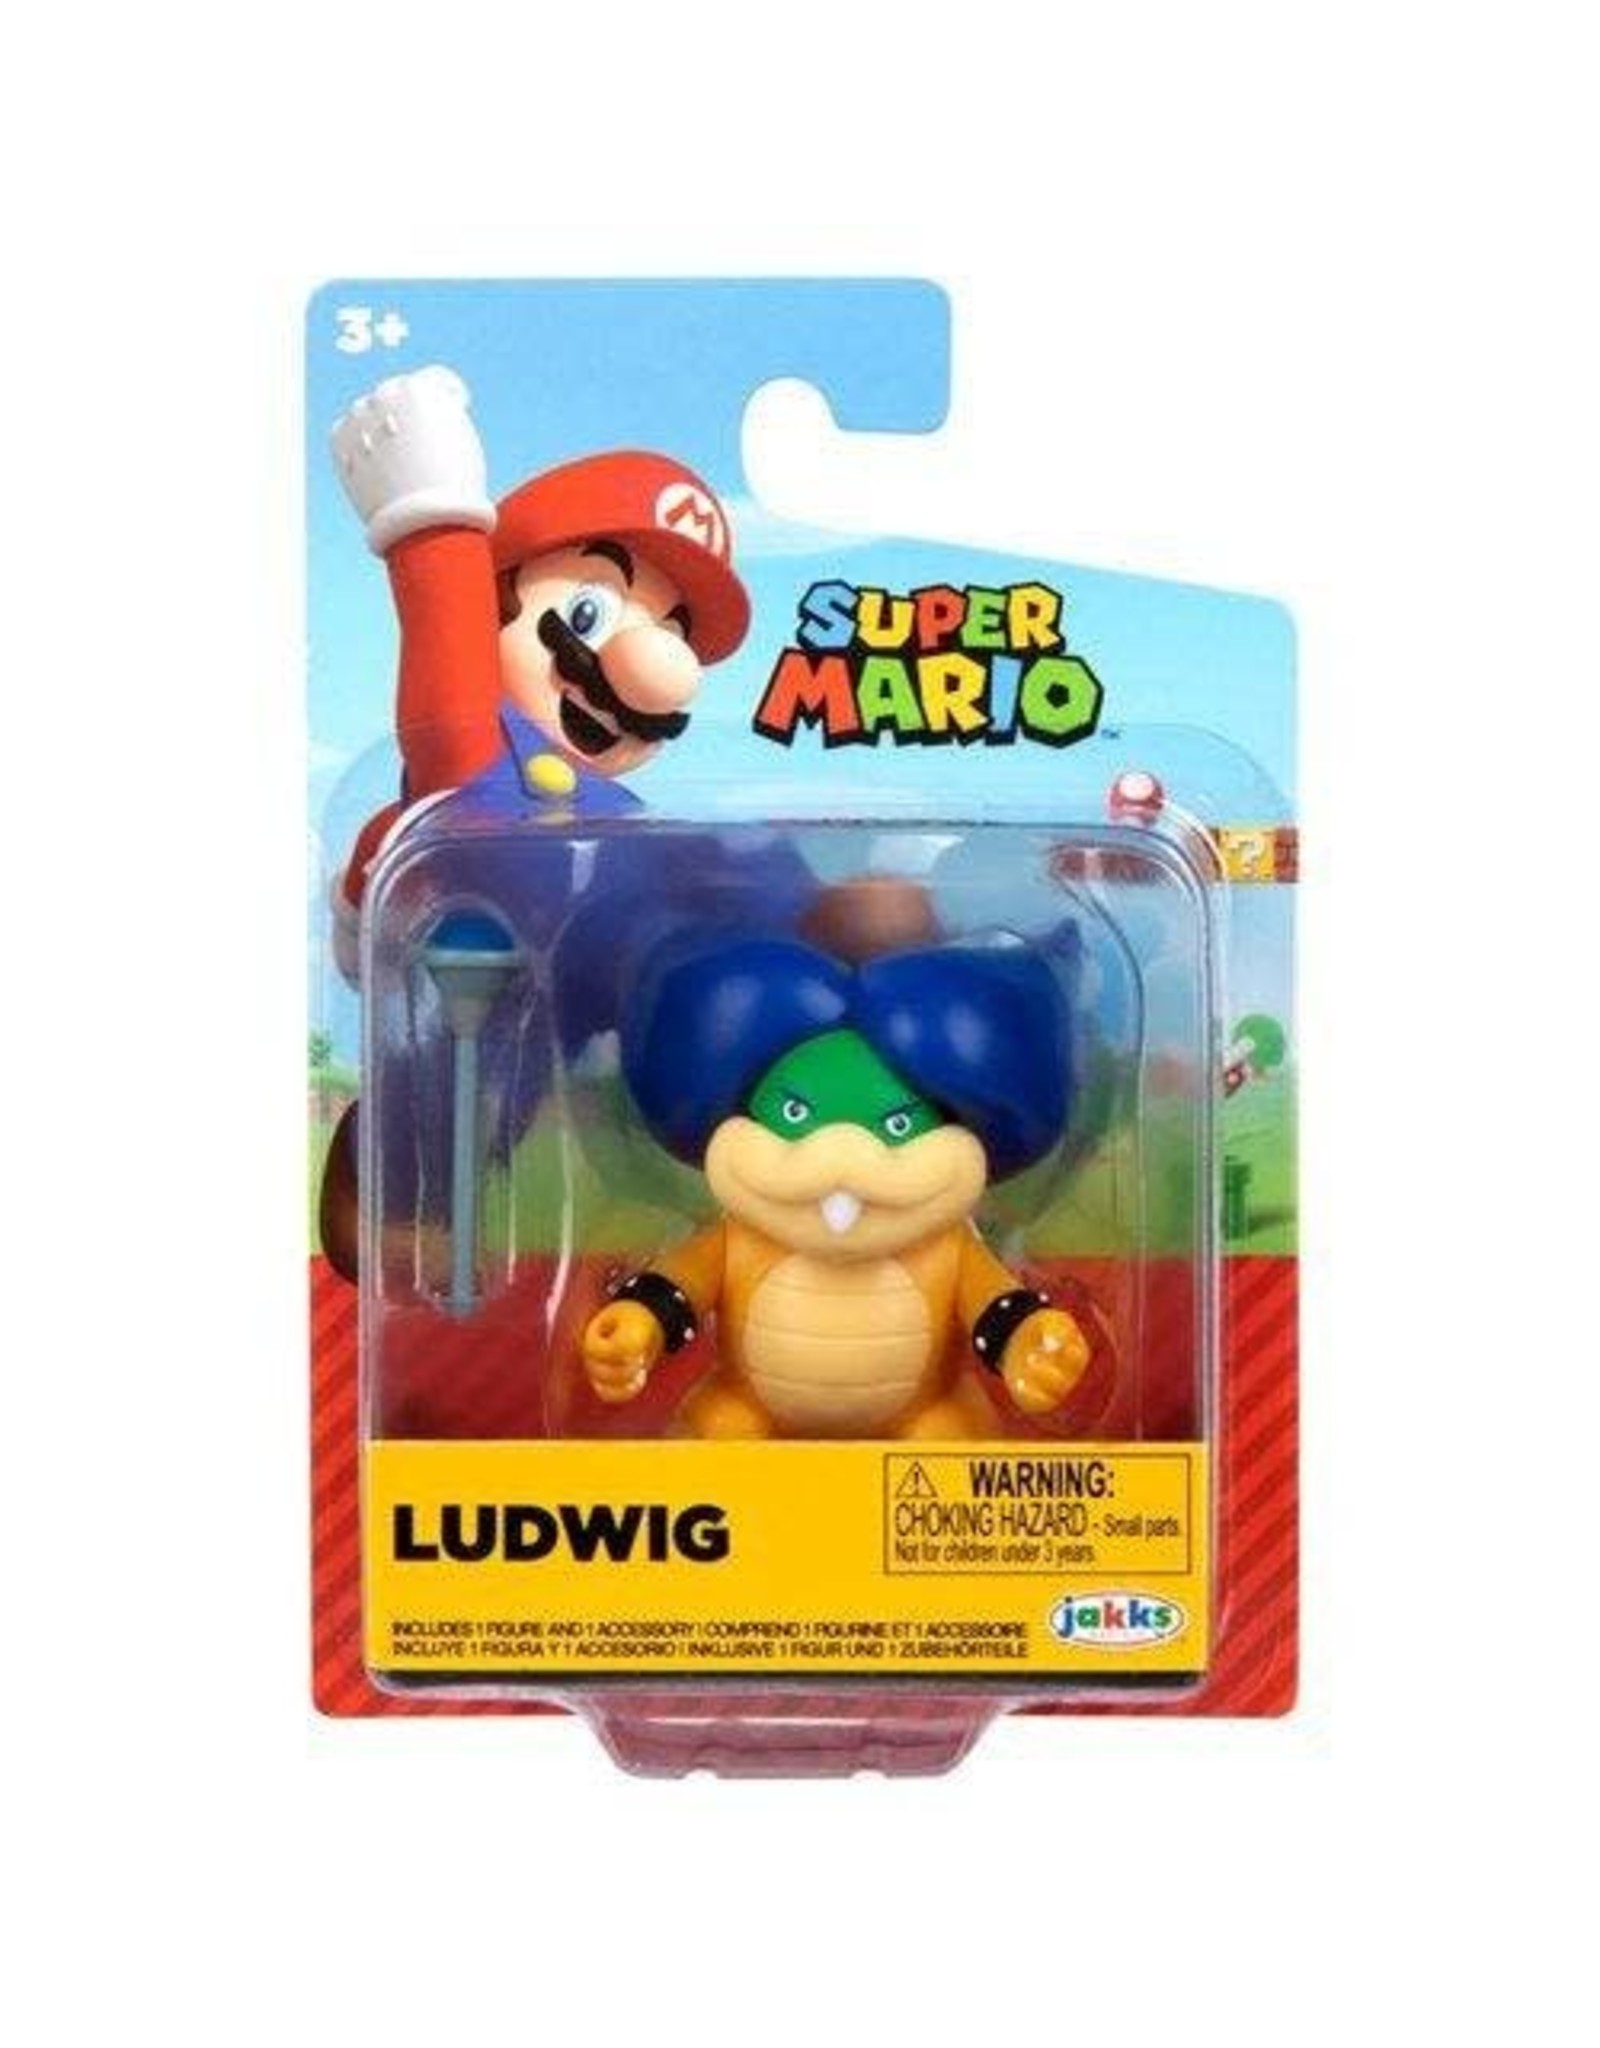 4" Super Mario Figure - Ludwig with Magic Wand